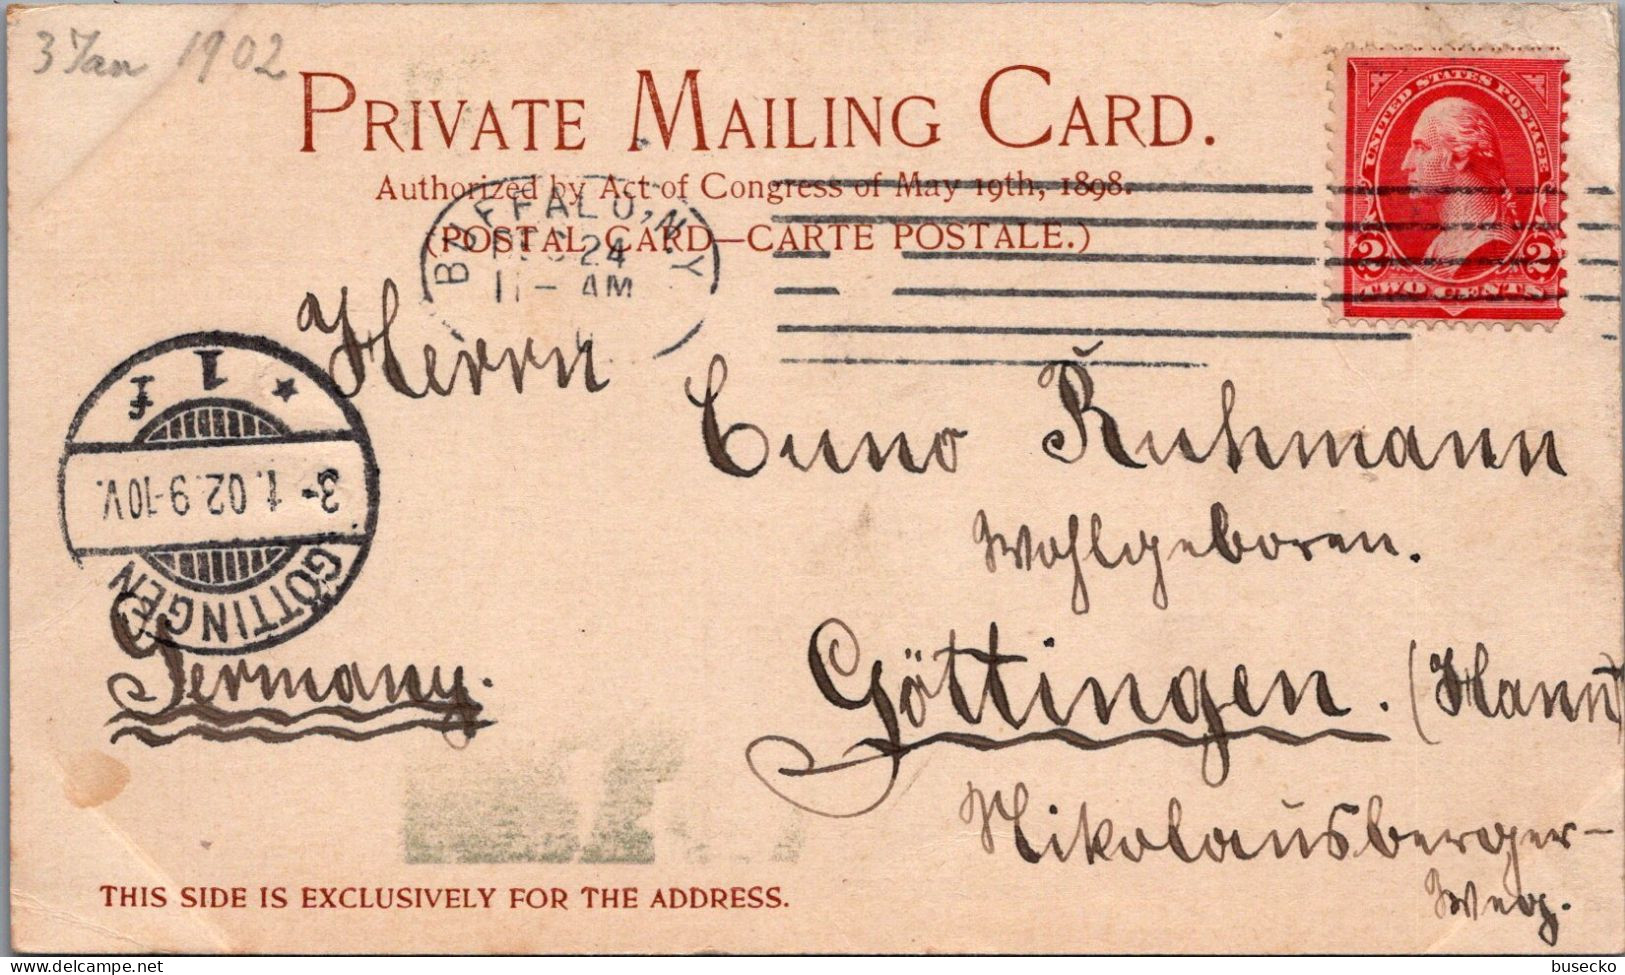 AMERICAN FALL From Goat Island Niagara Buffalo 1901 Brücke Bridge Private Mailing Card - Buffalo